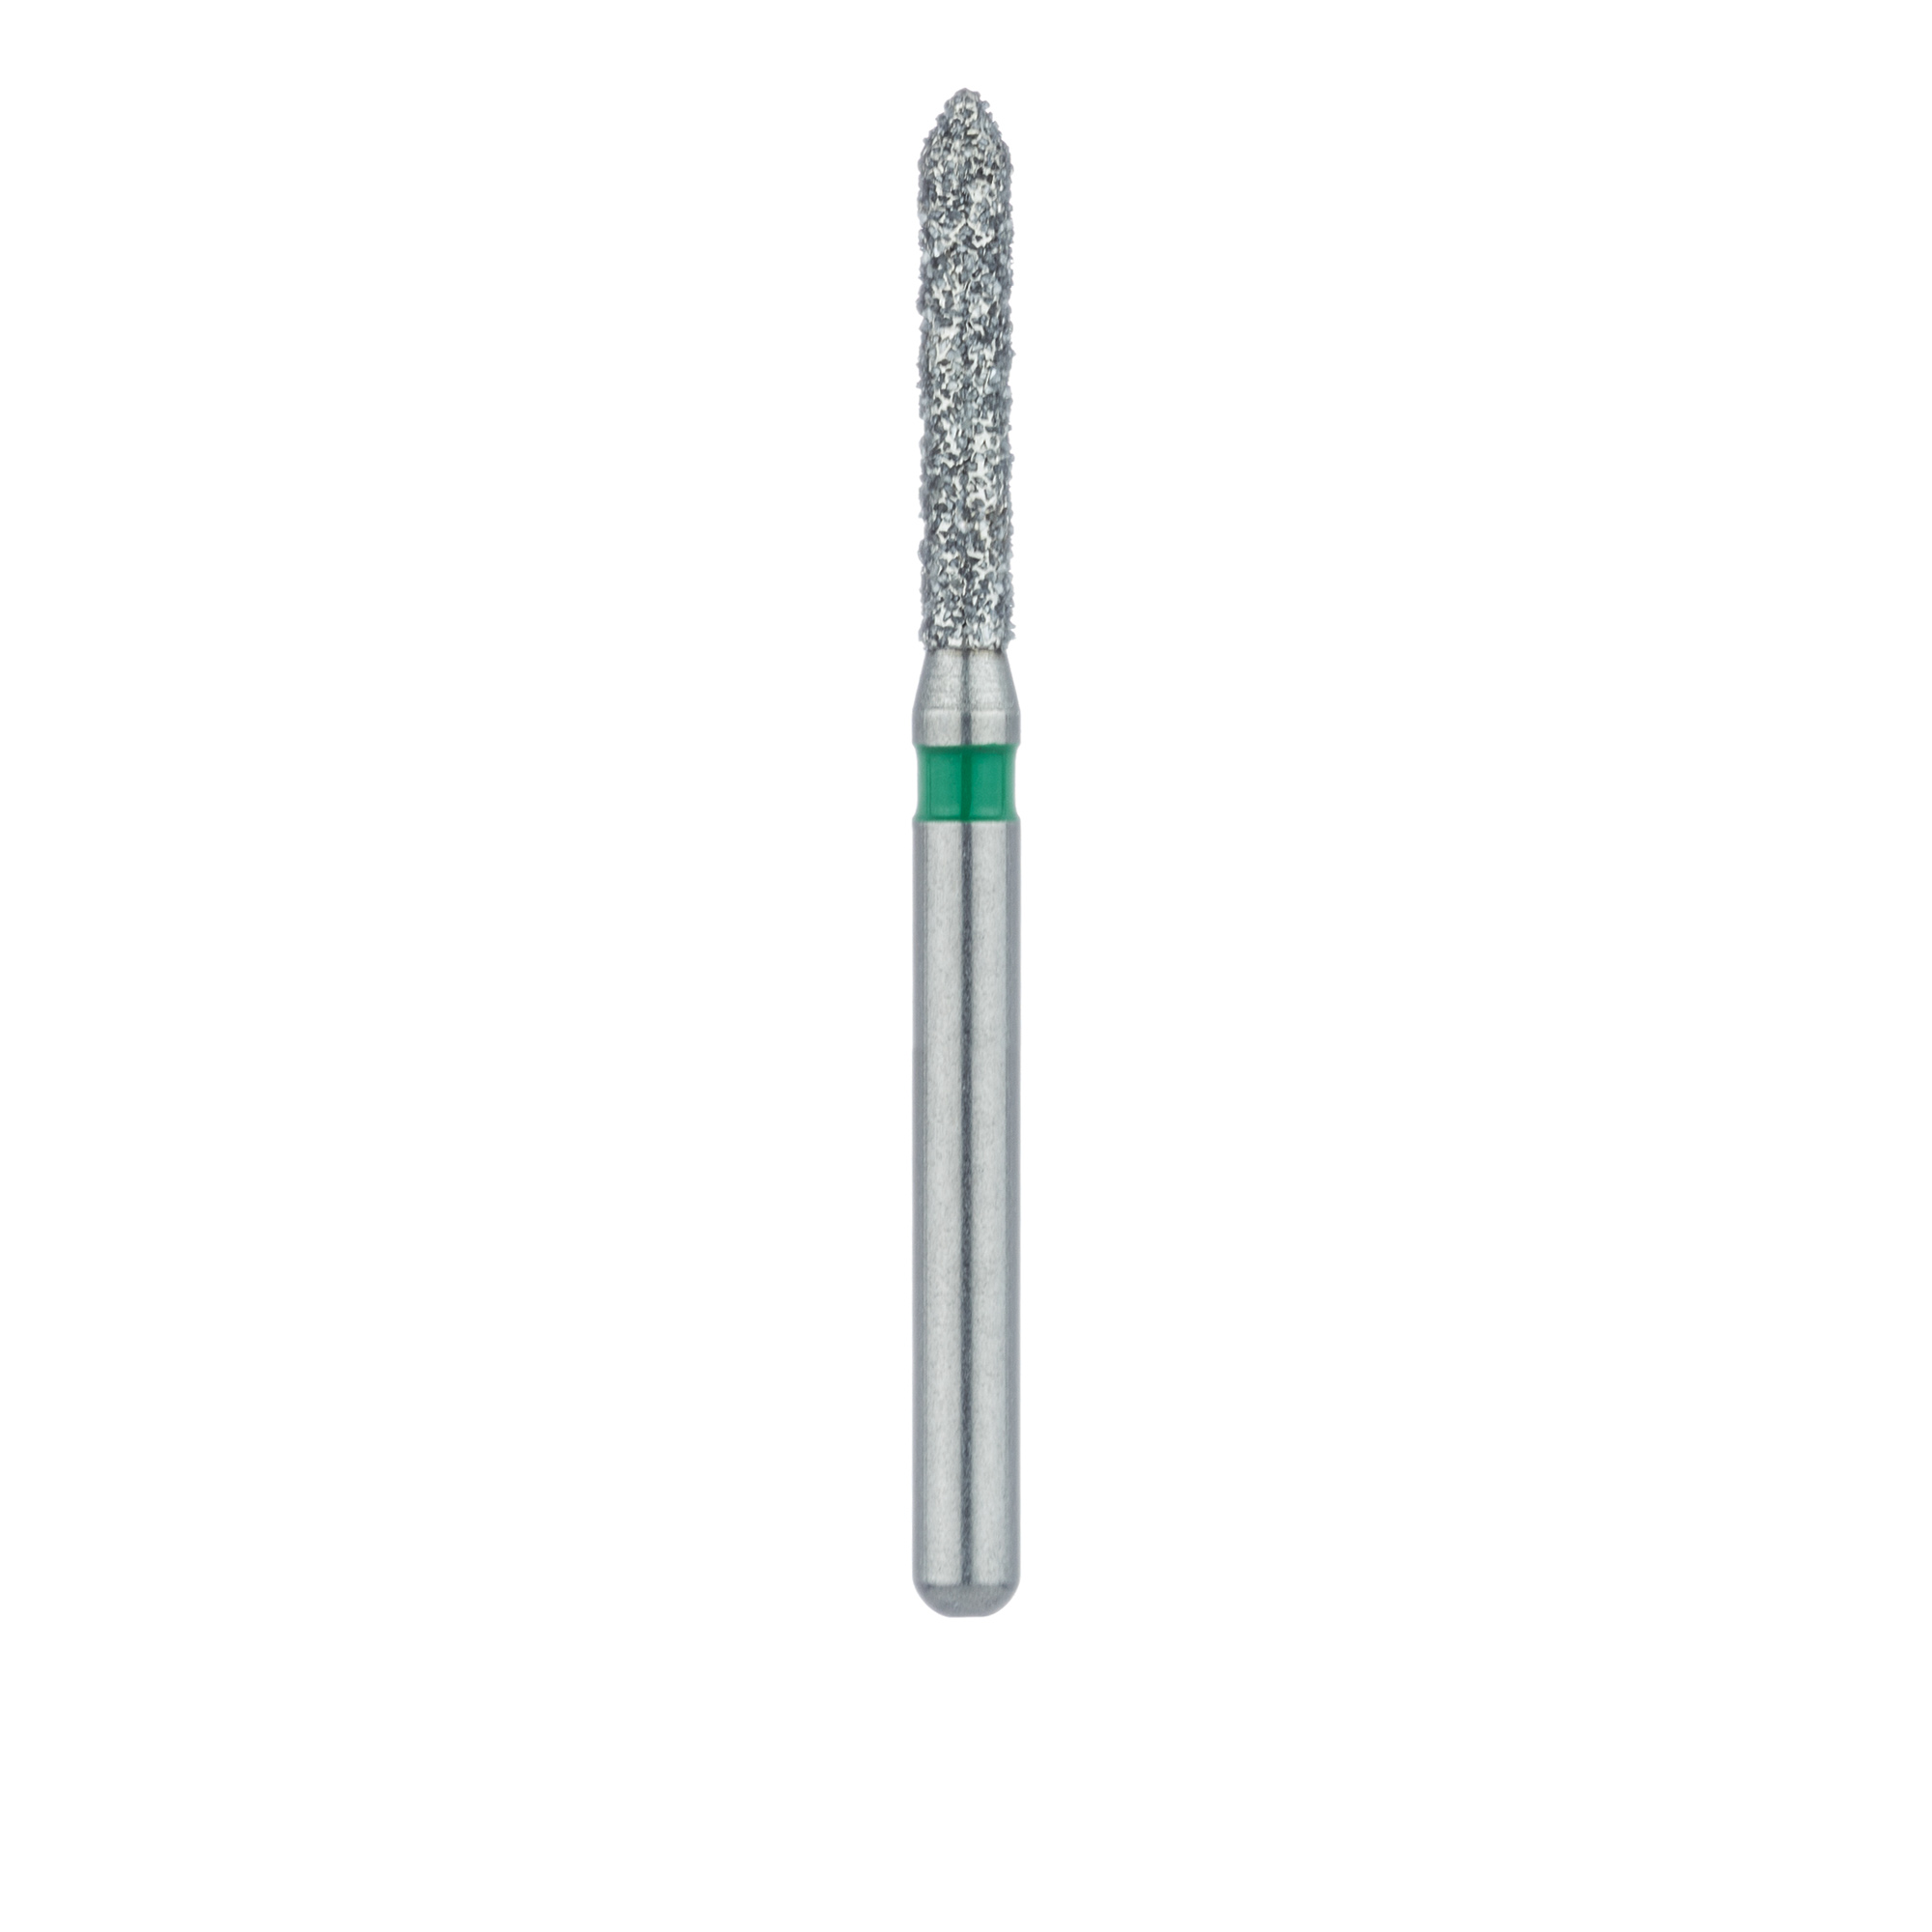 885G-014-FG Pointed Tip Cylinder Diamond Bur, 1.4mm Ø, Coarse, FG